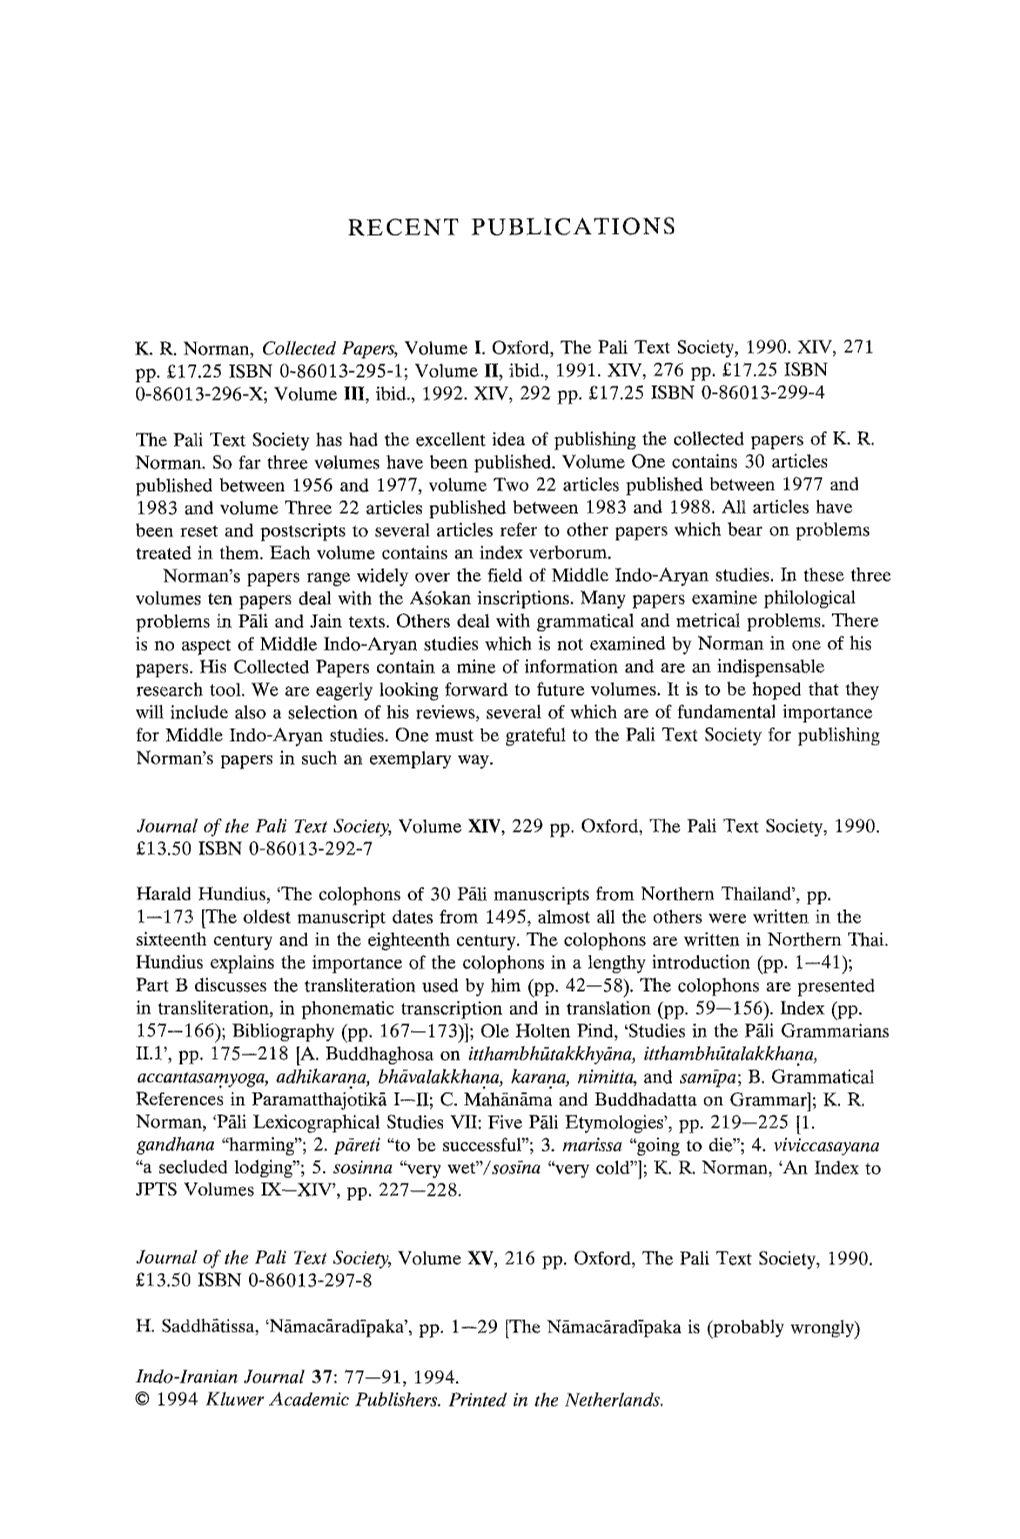 II.L', Pp. 175--218 [A. Buddhaghosa on Itthambhfttakkhy(Ma, Itthambh~Talakkhana, Accantasam, Yoga, Adhikarana, Bhg~Valakkhana, Karana, Nimitta, and Samipa; B